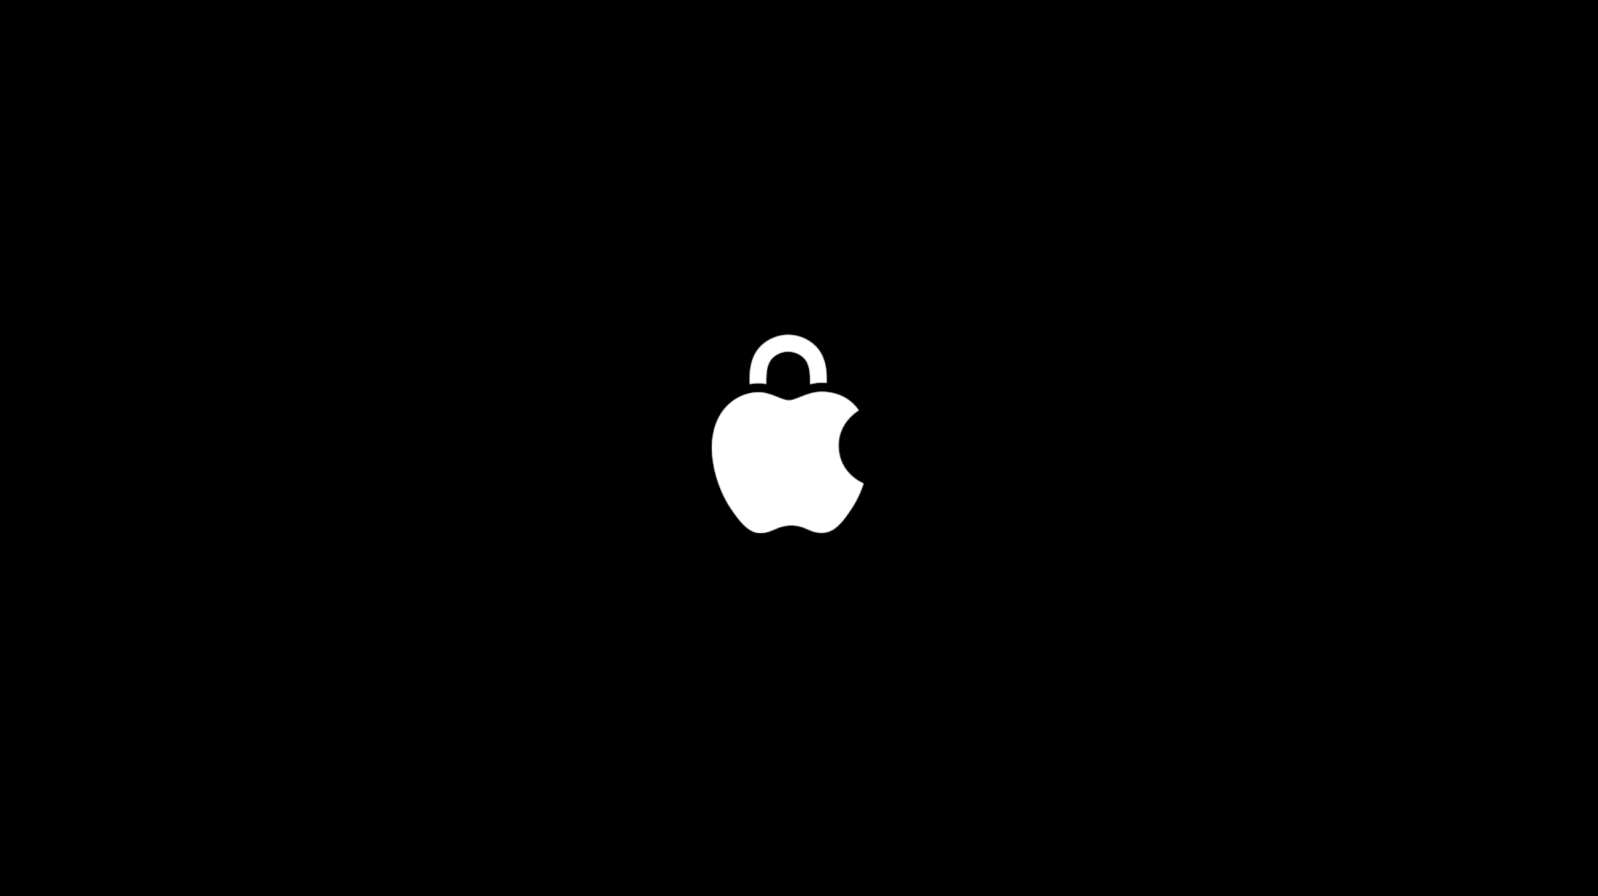 Mac M1 Apple Silicon privacy concerns